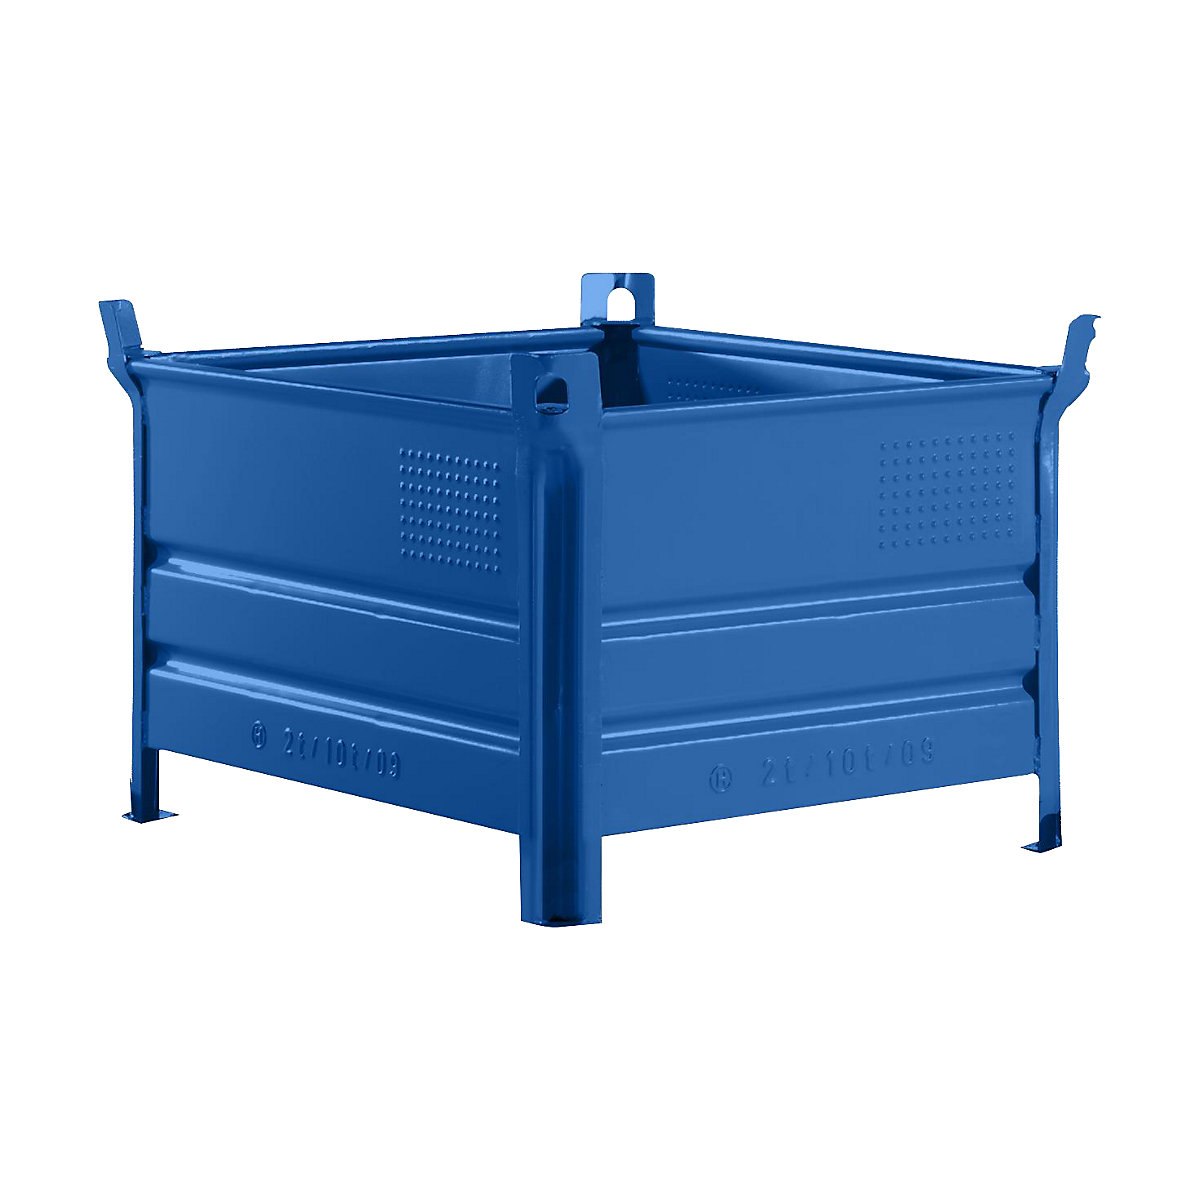 Vollwand-Stapelbehälter Heson, BxL 800 x 1000 mm, Traglast 1000 kg, blau, ab 10 Stk-6